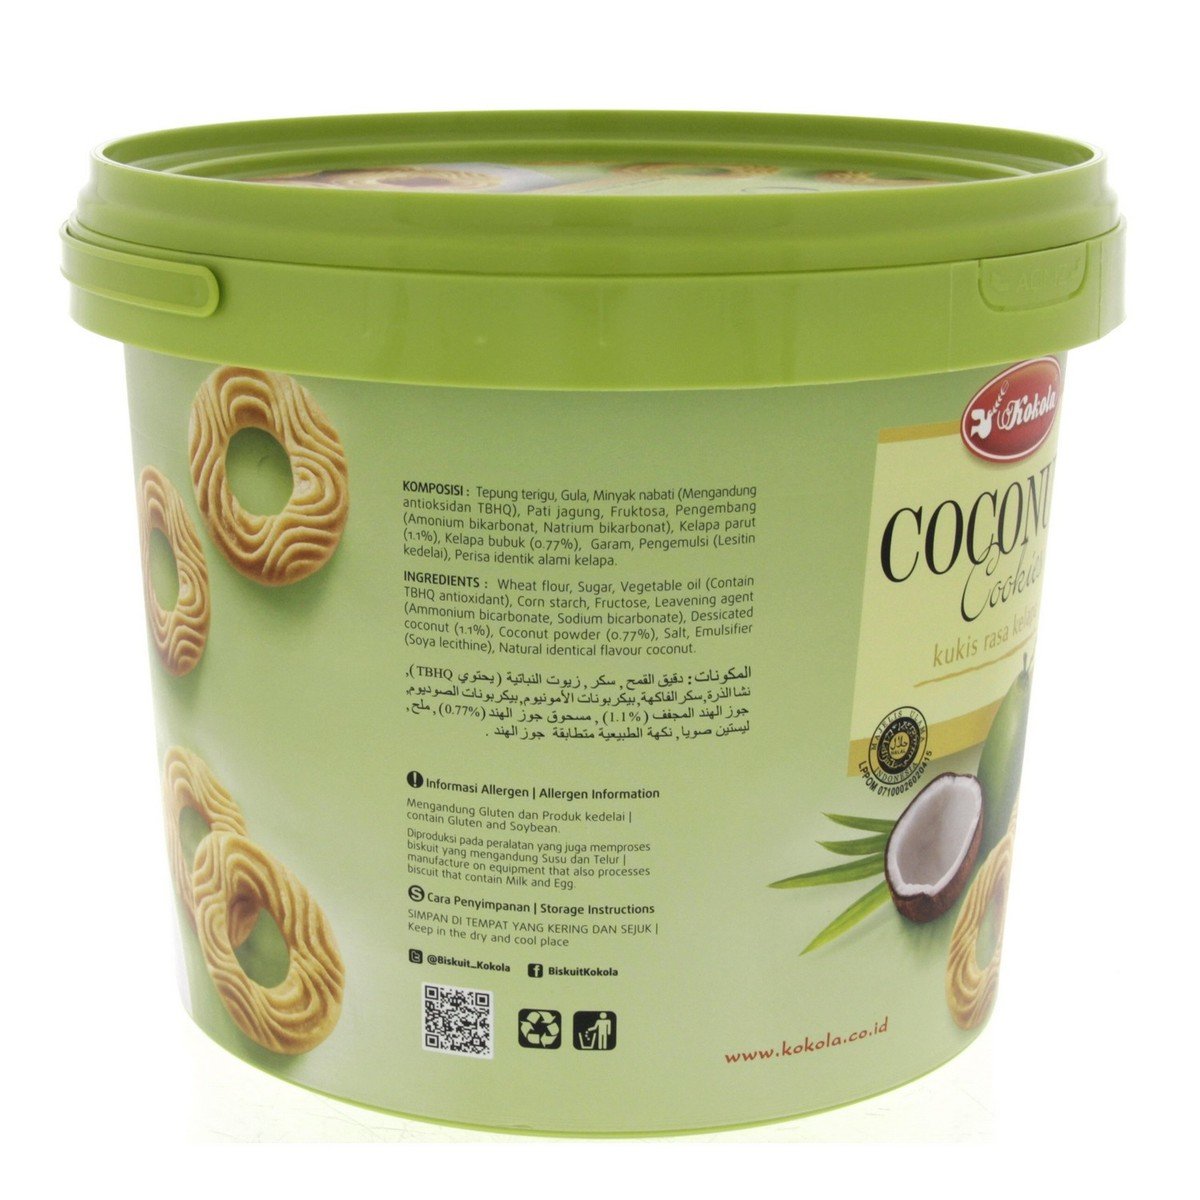 Kokola Coconut Cookies 400 g